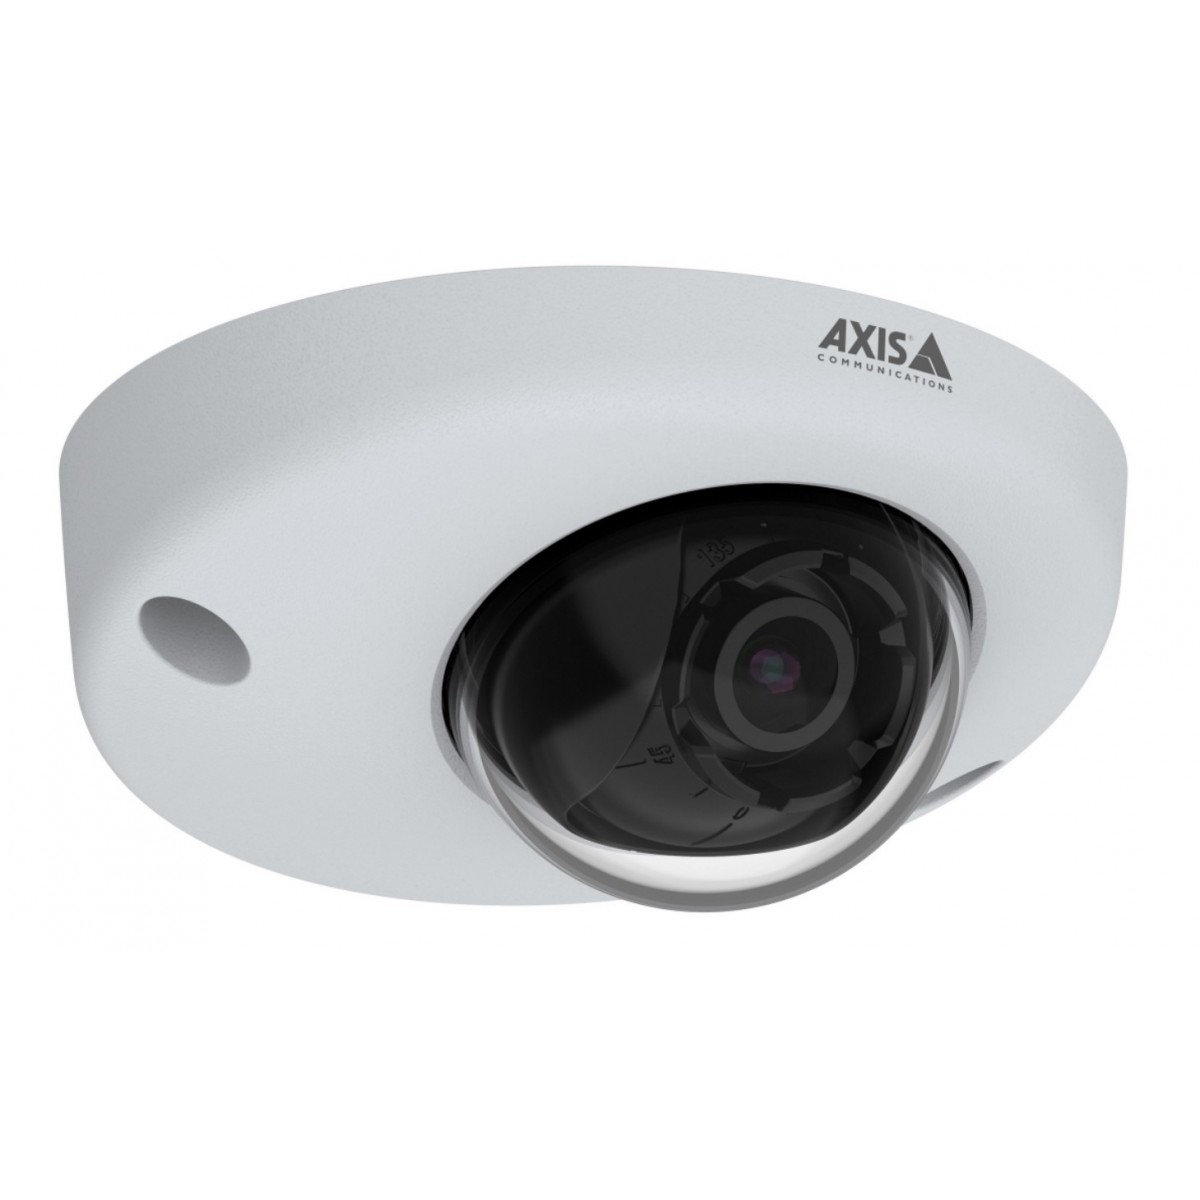 Axis P3925-R M12 - IP security camera - Wired - Digital PTZ - 55032 Class A - EN 55035 - EN 61000-6-1 - EN 61000-6-2 - FCC Part 